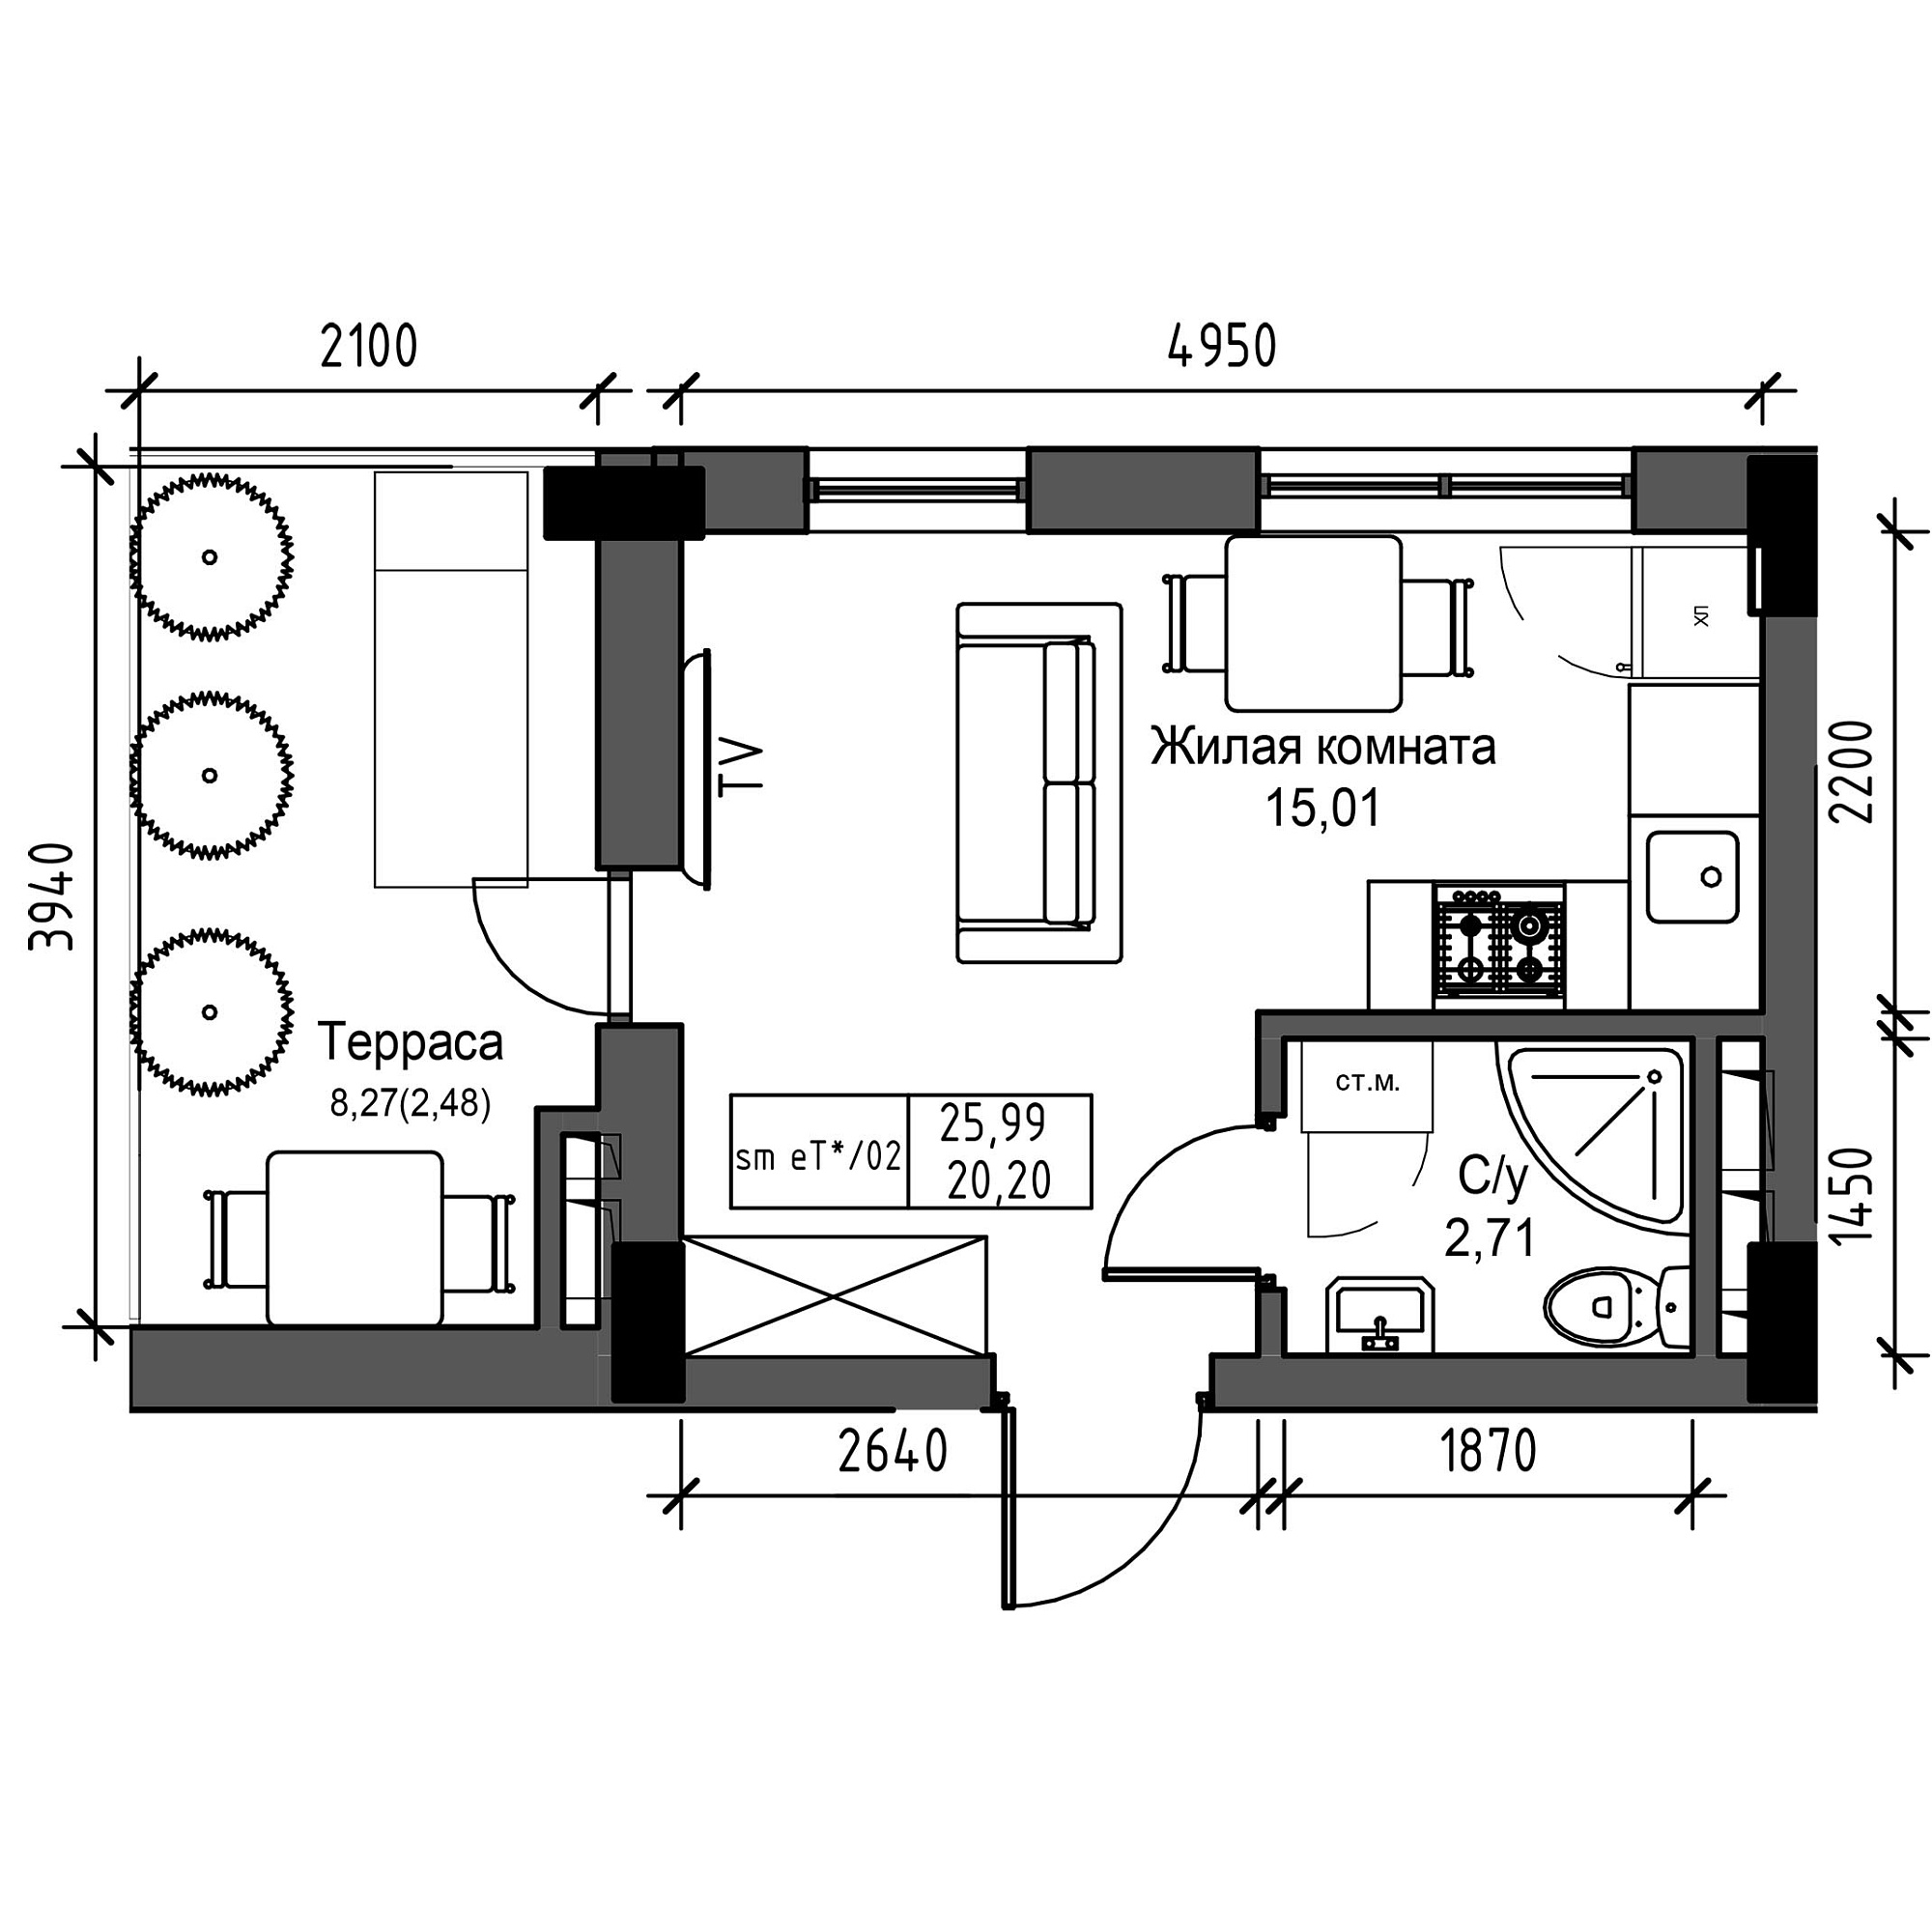 Planning Smart flats area 20.2m2, UM-003-06/0063.